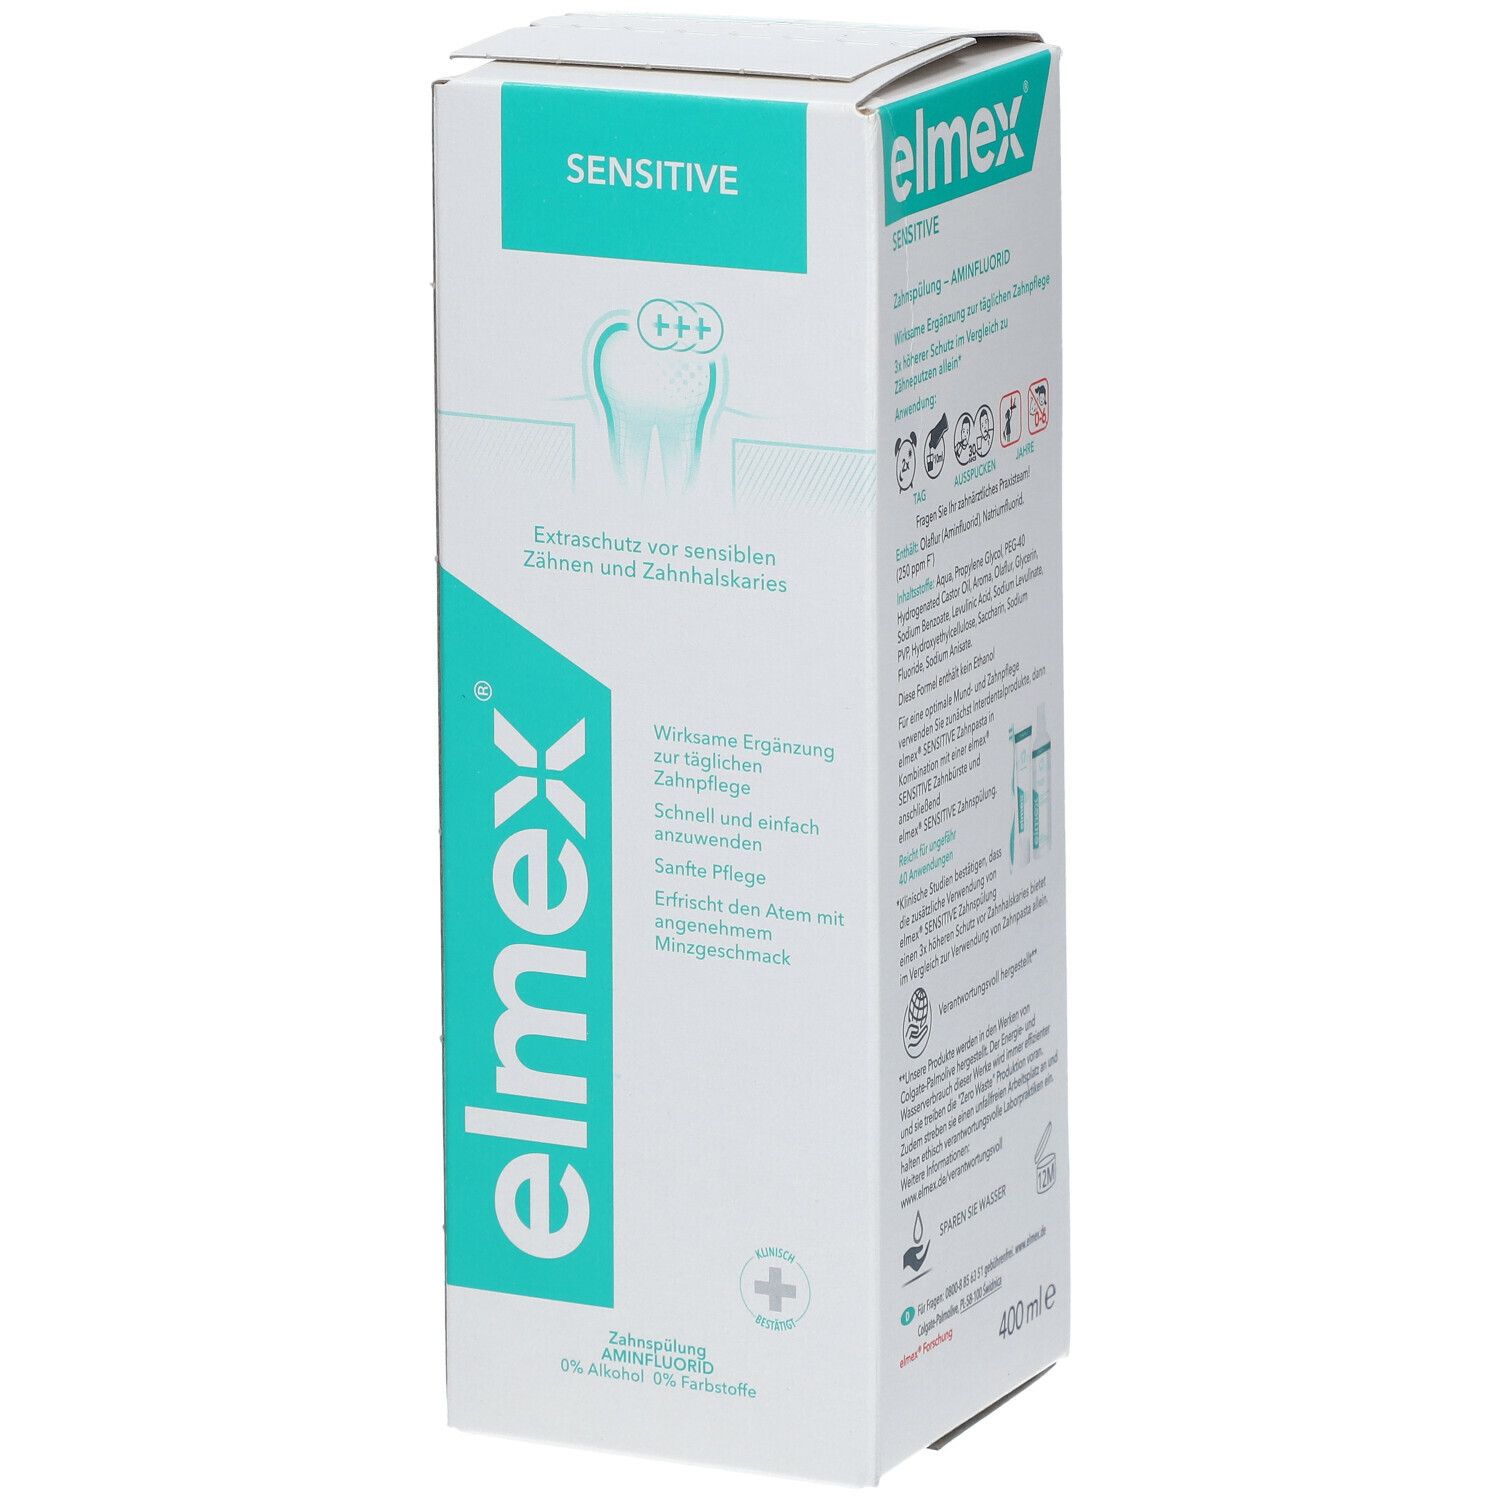 elmex Sensitive Zahnspülung